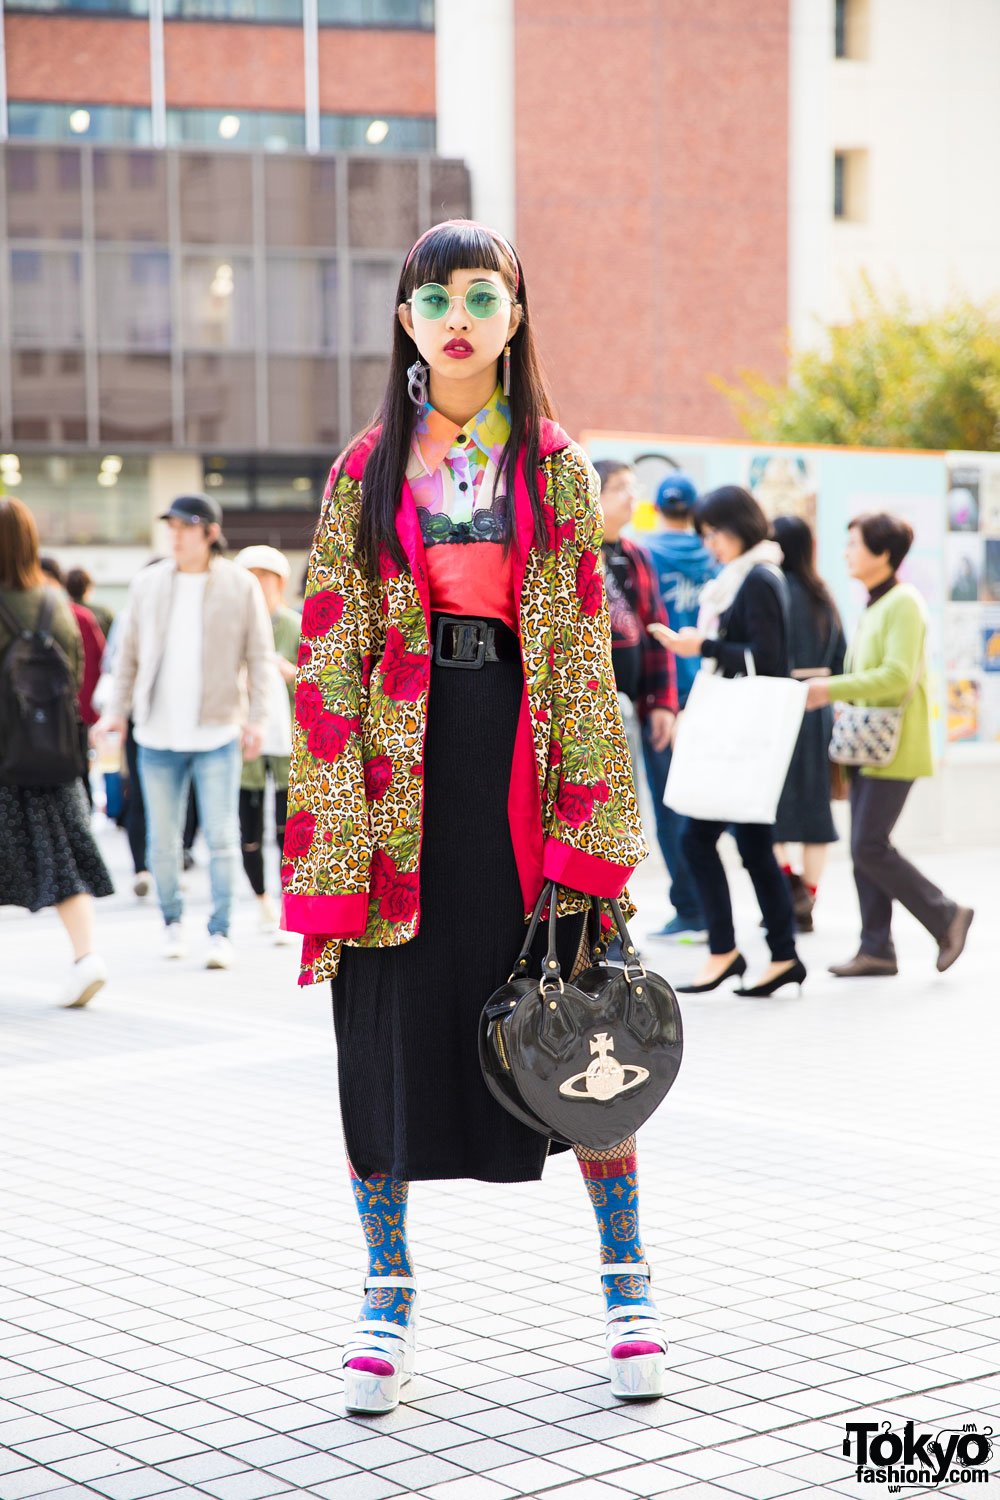 Tokyo Fashion on X: 19-year-old Yoshino (@HysCra) at Bunka